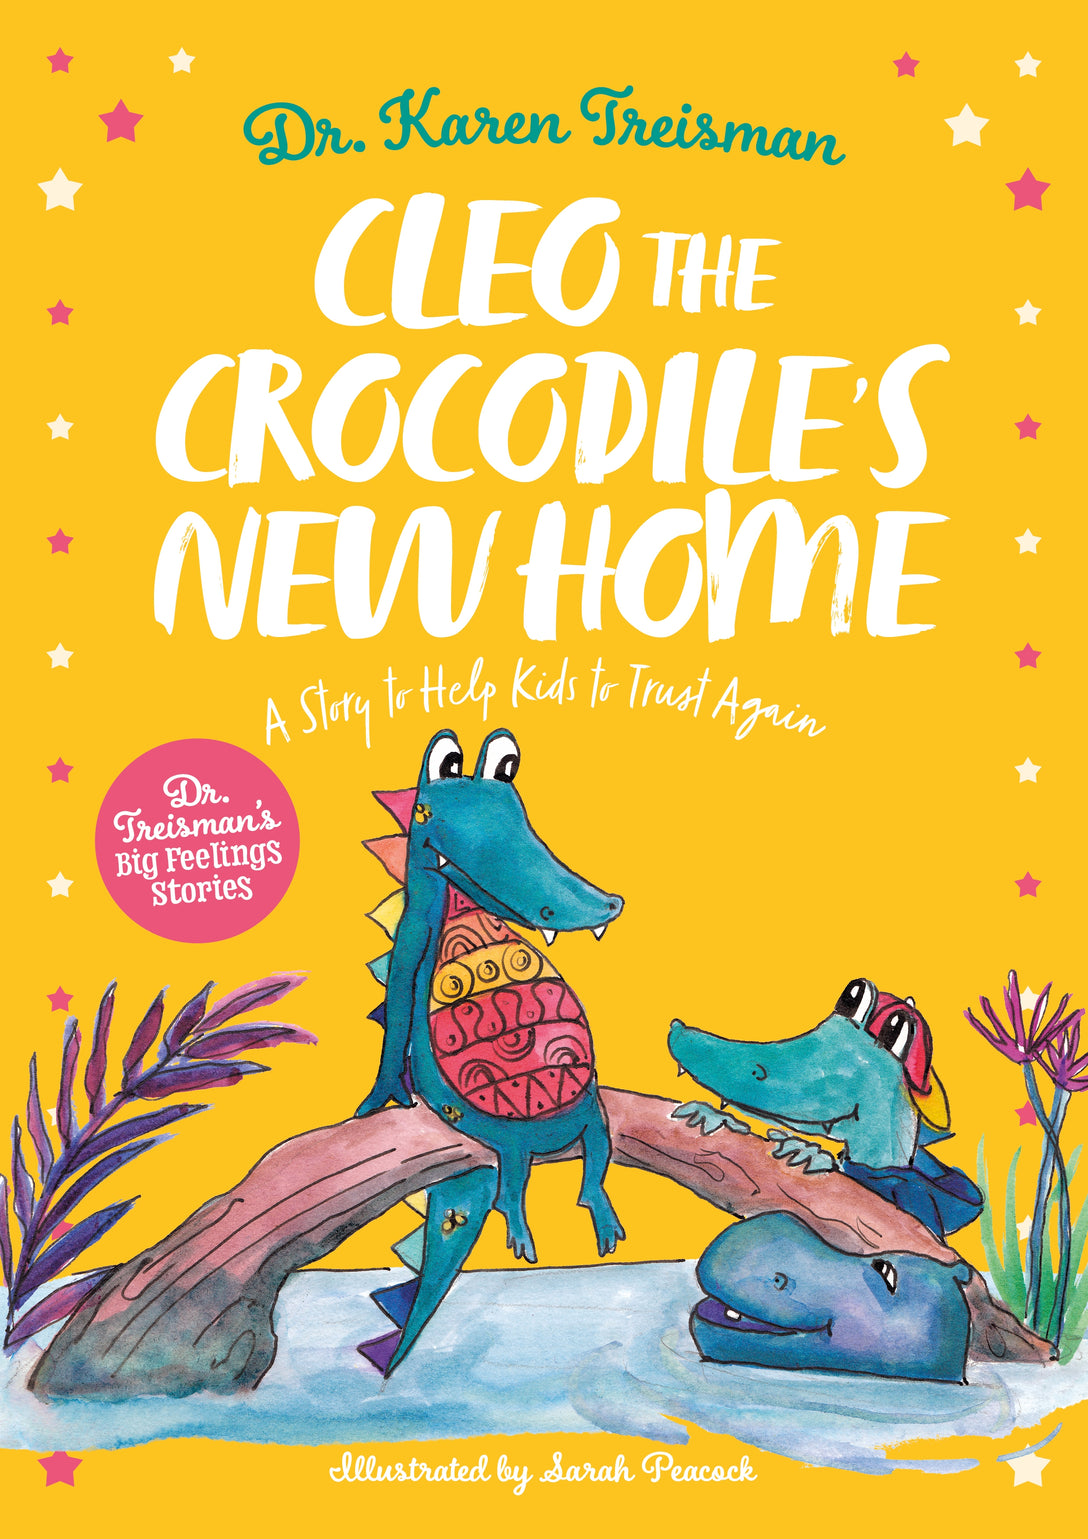 Cleo the Crocodile's New Home by Sarah Peacock, Karen Treisman